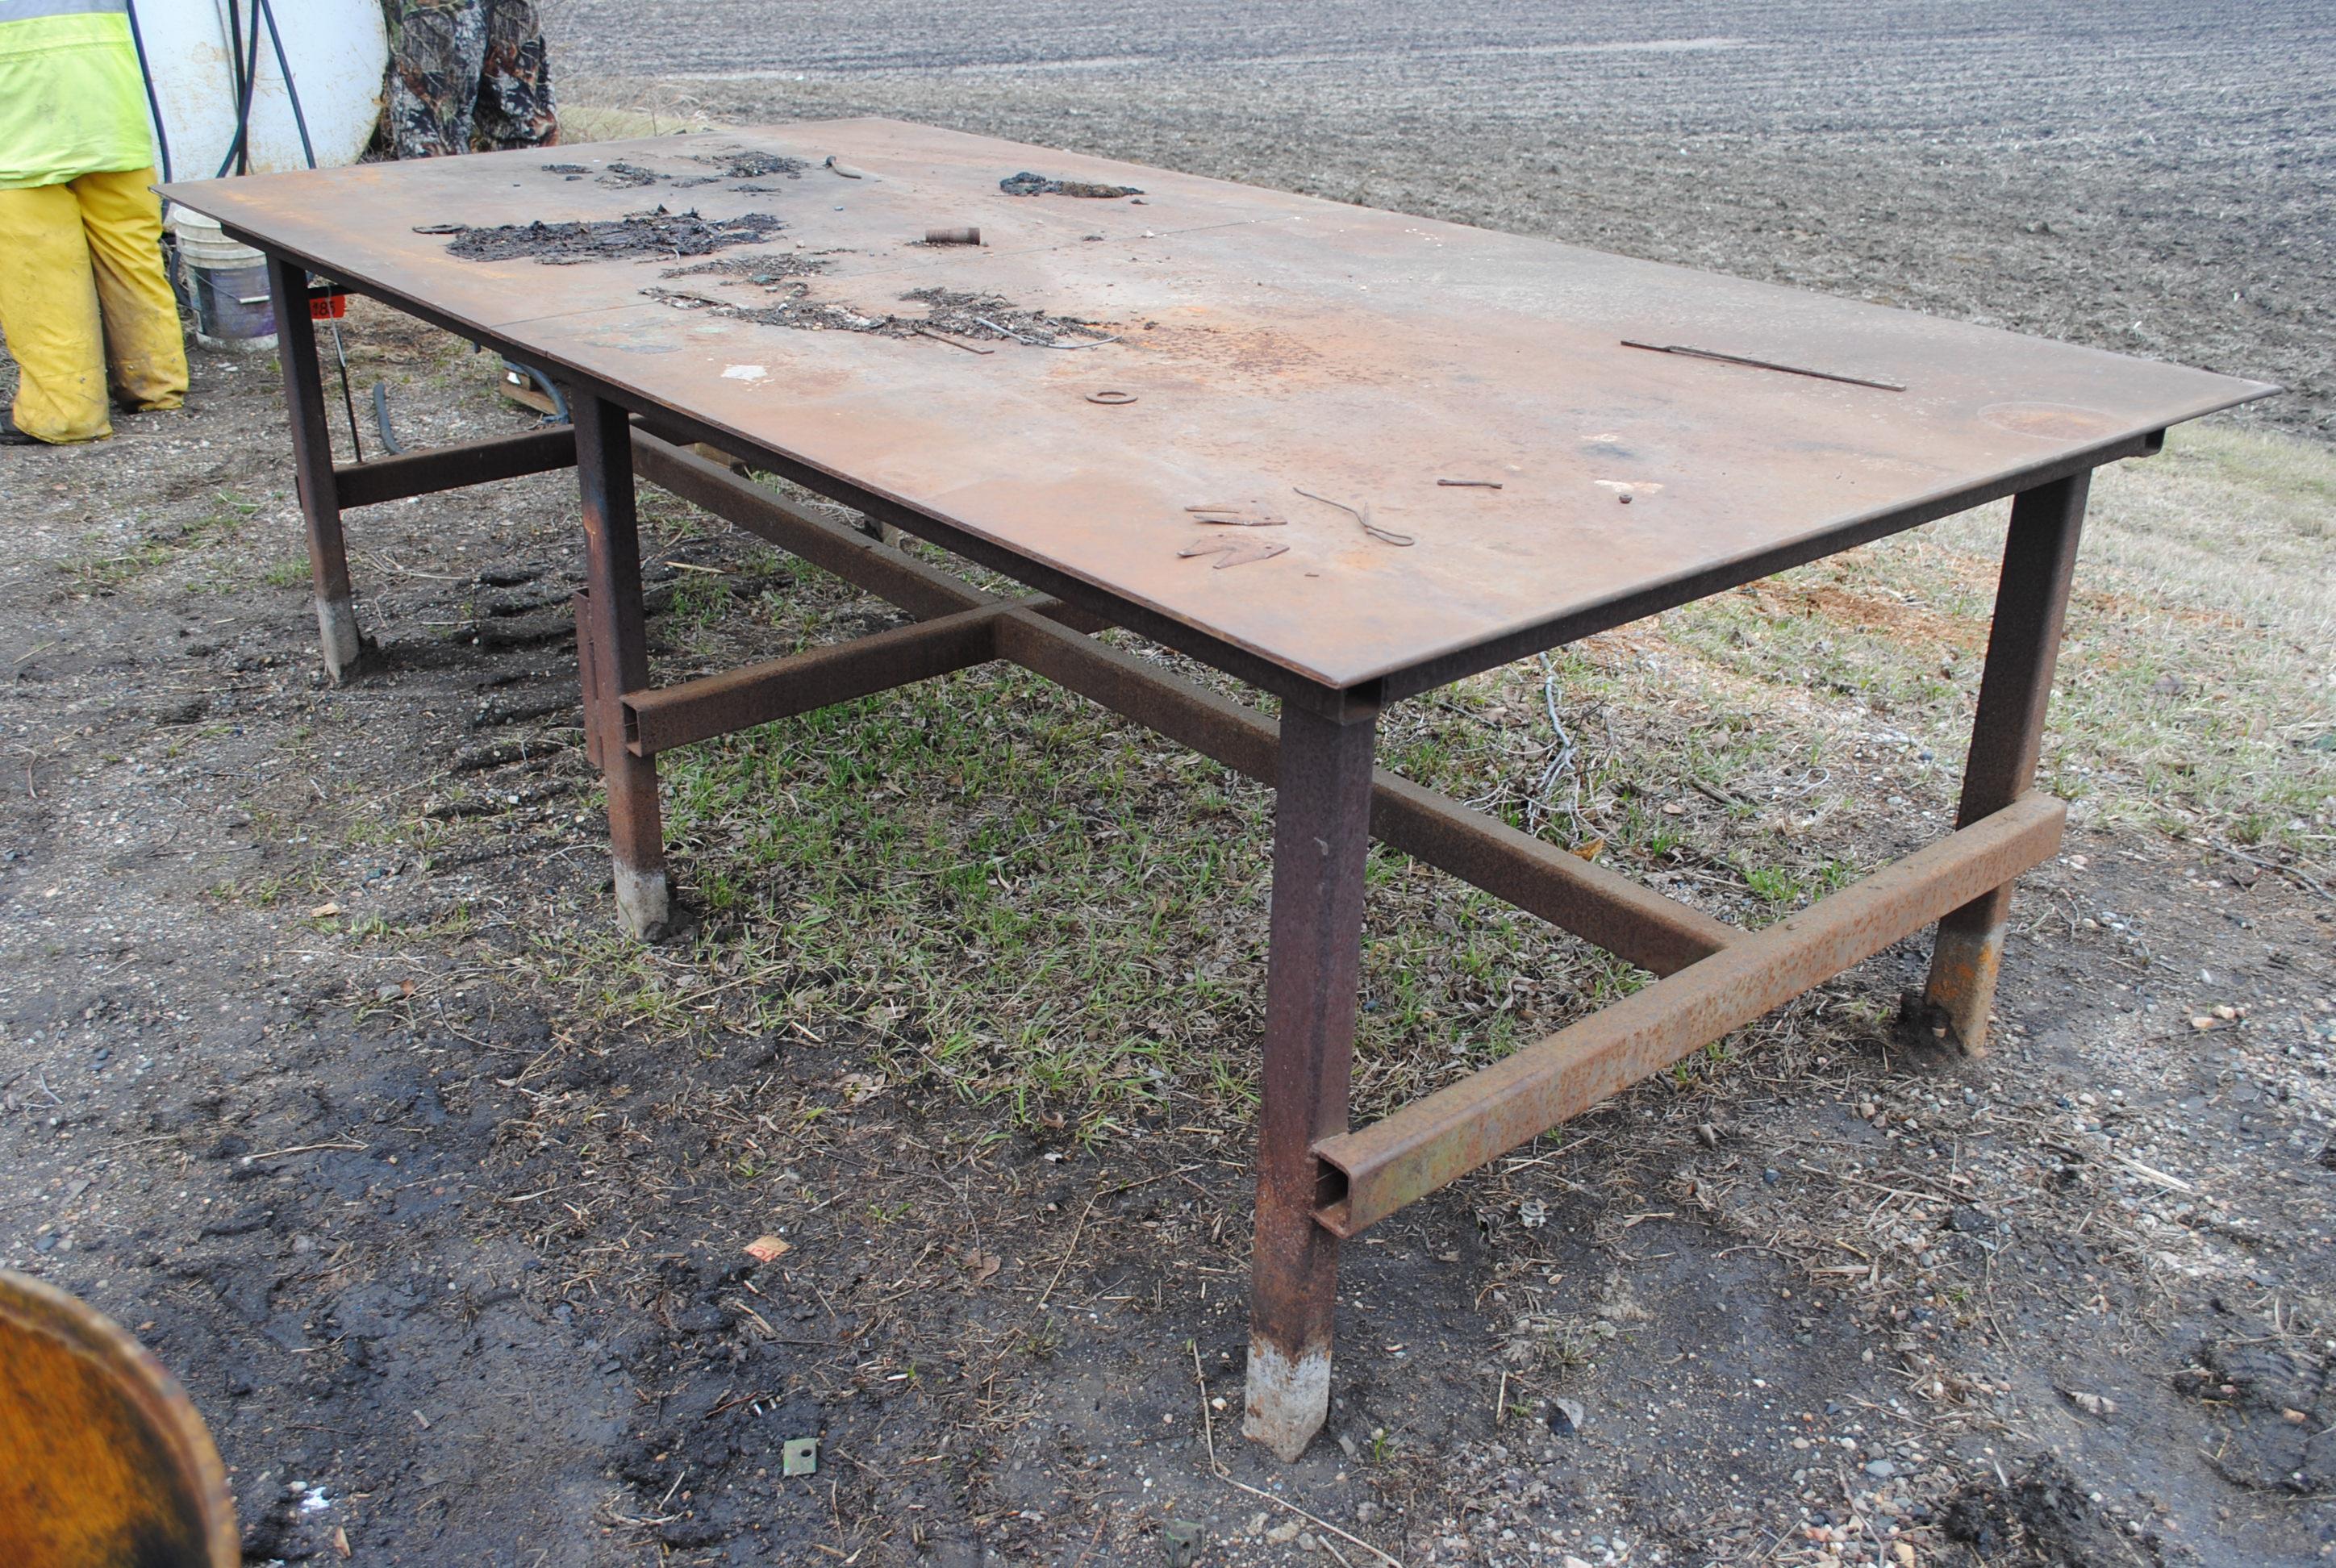 5'x10' Welding Table, 3' tall